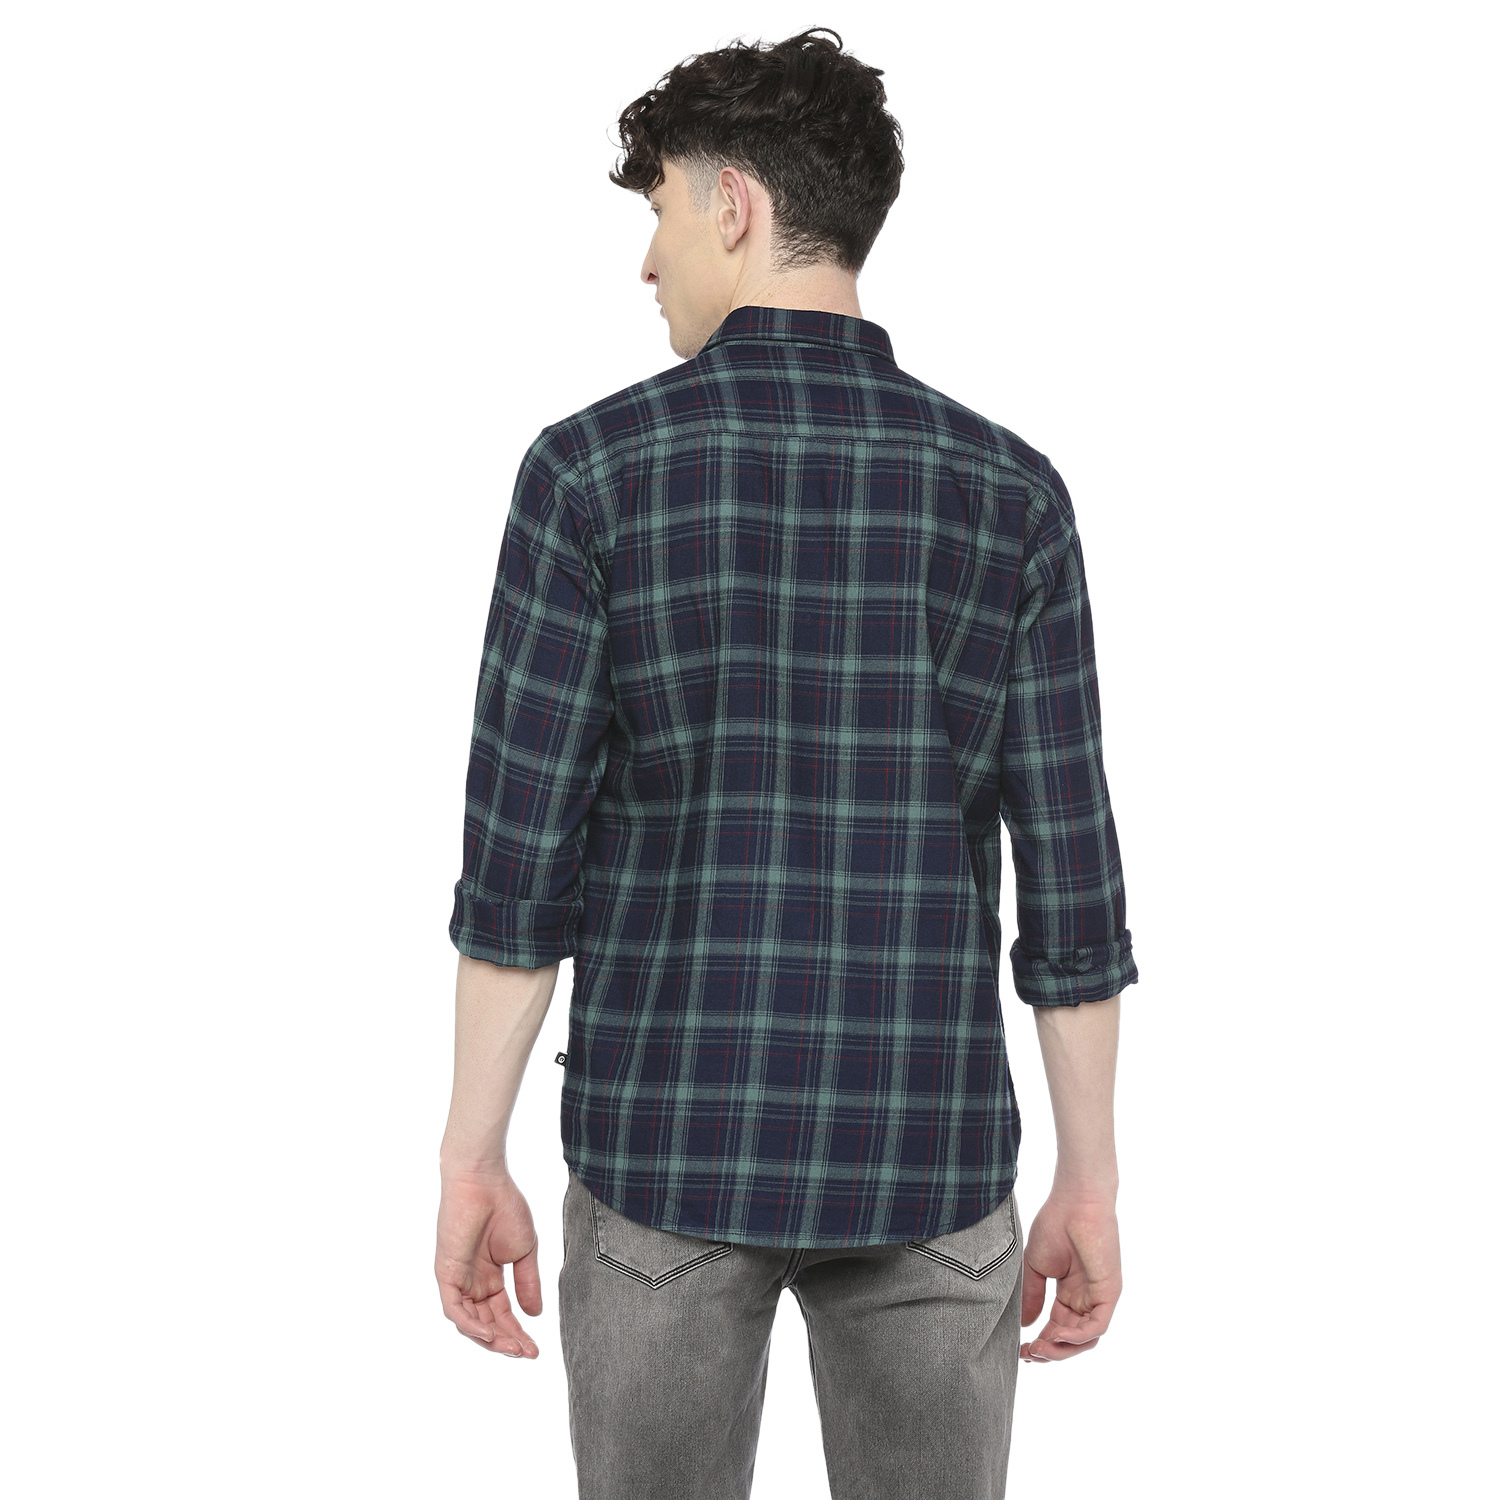 Integriti Men's Dark Color Checkered Shirt